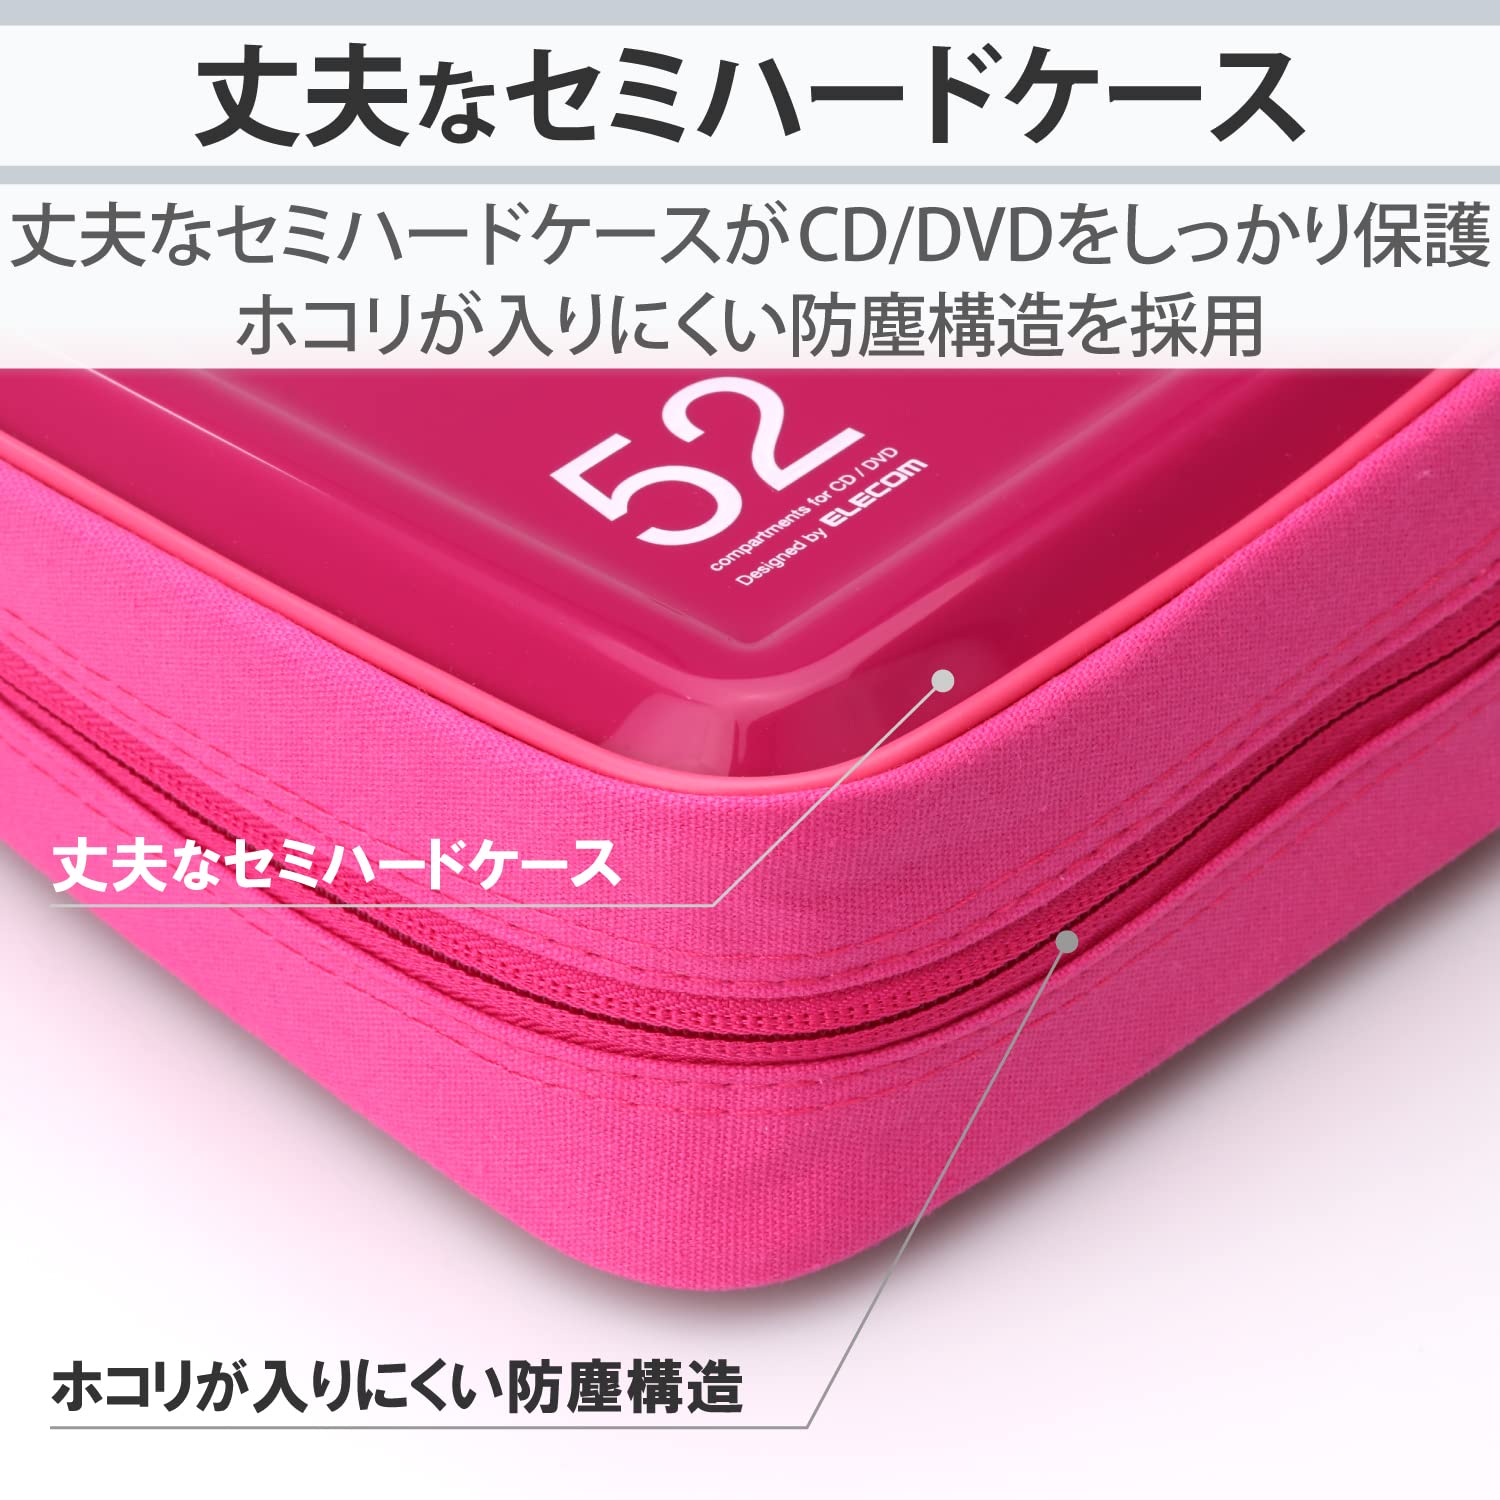 ELECOM case pink DVD CD CCD-H52PN 52 sheets semi-hard zip closure storage NEW